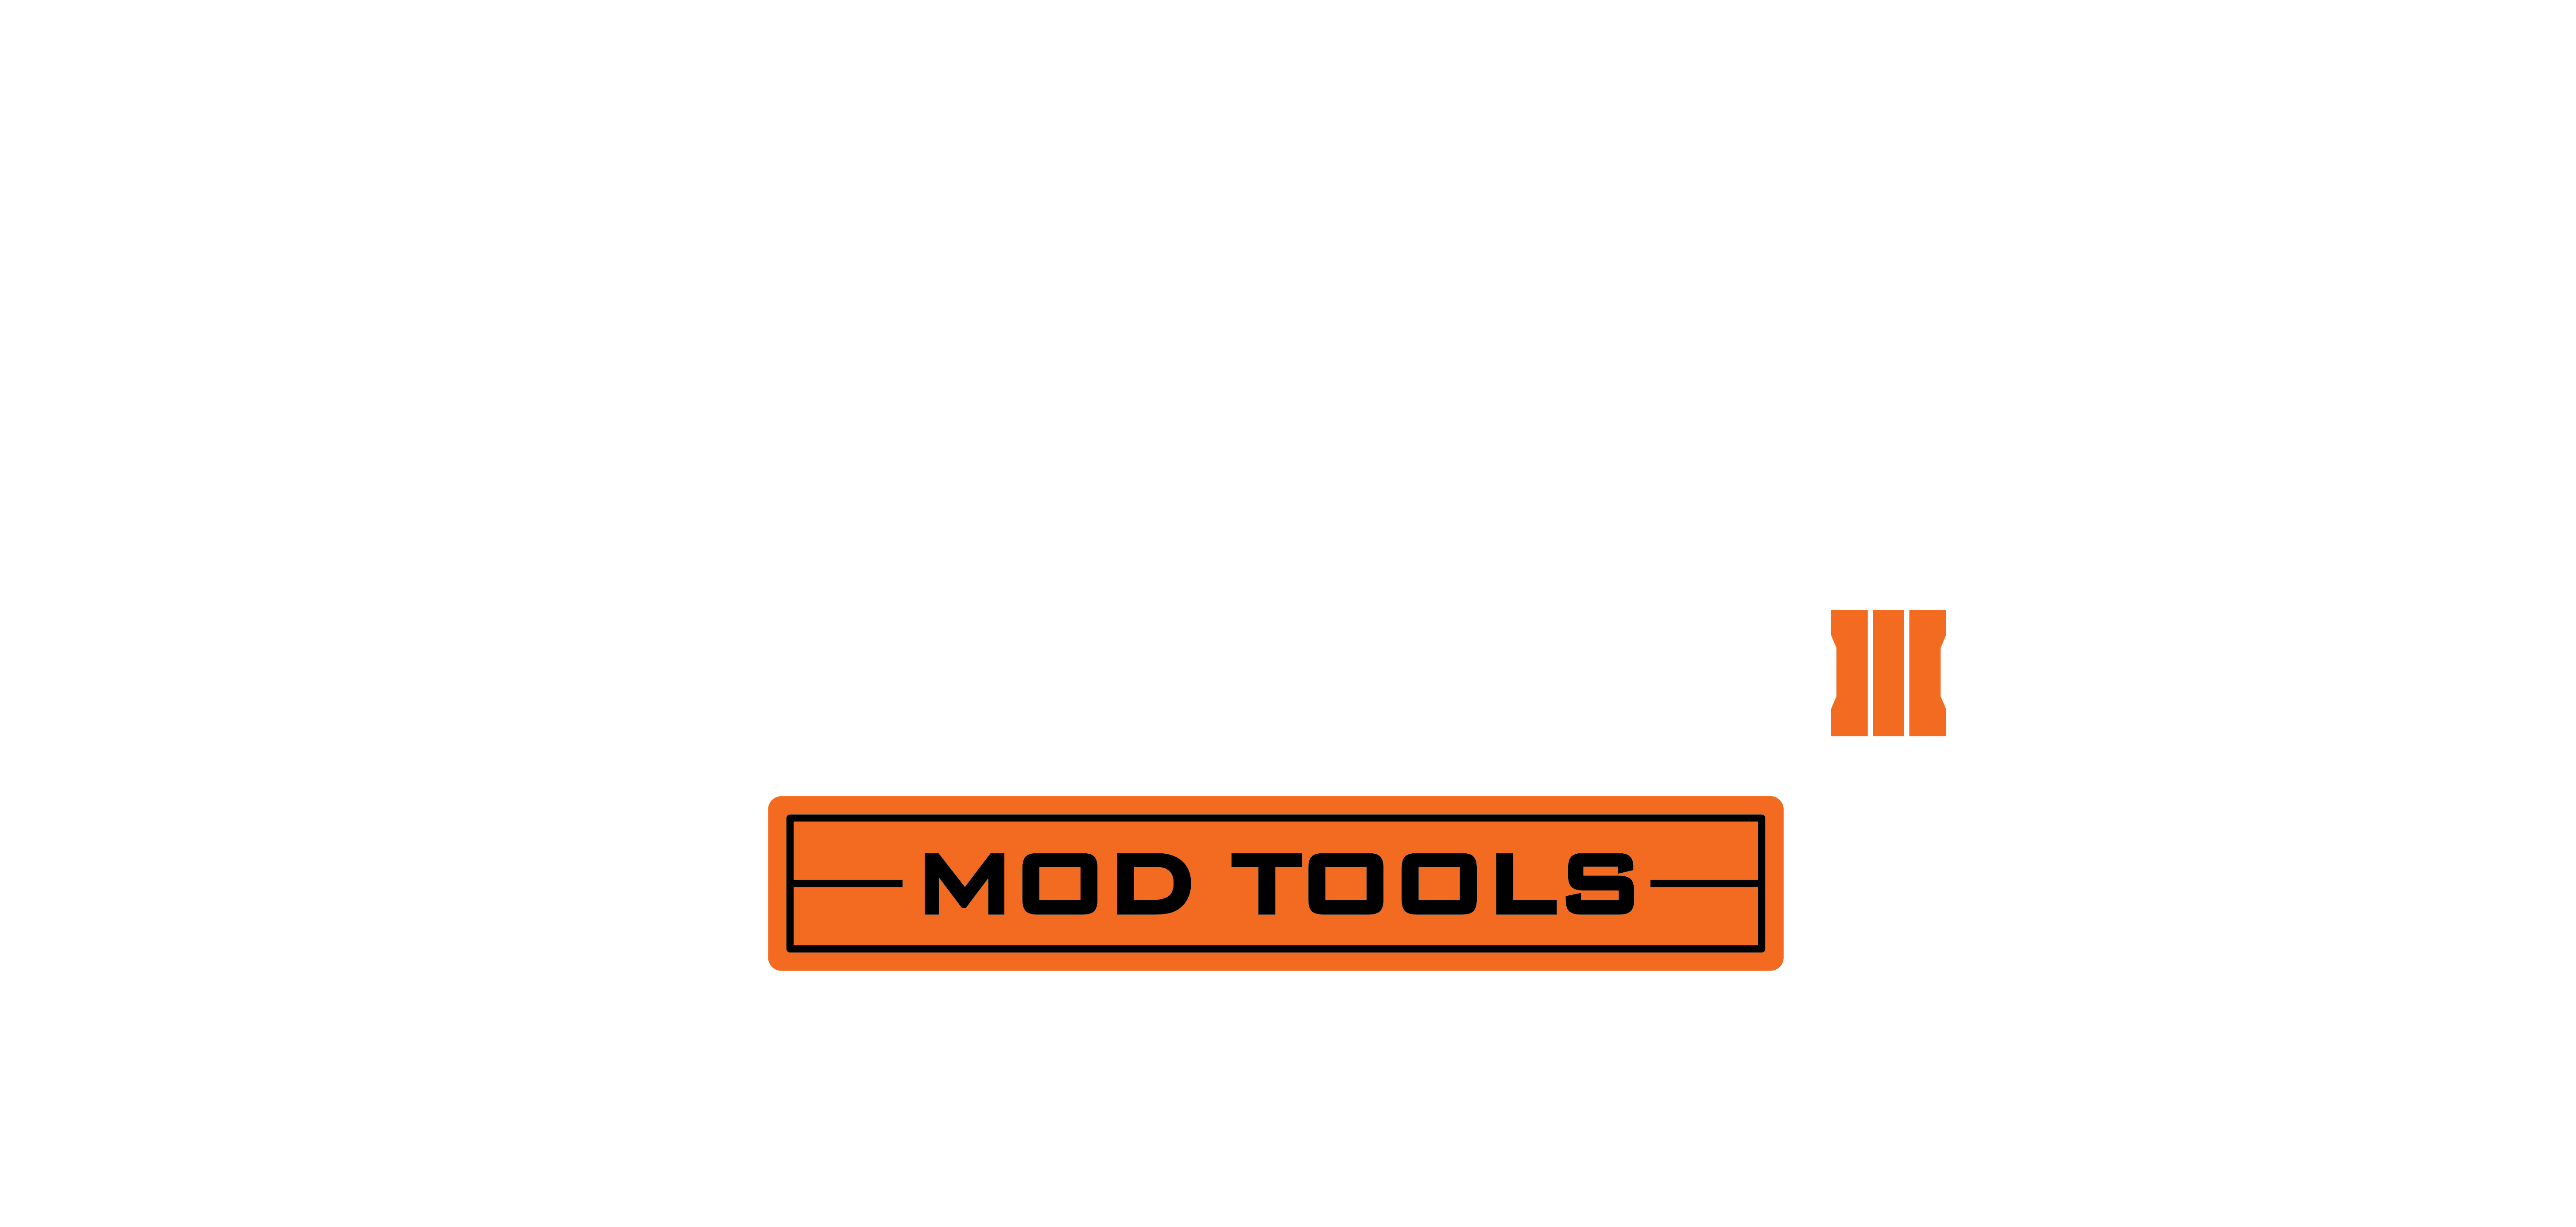 black ops 3 mod tool spawn in guns